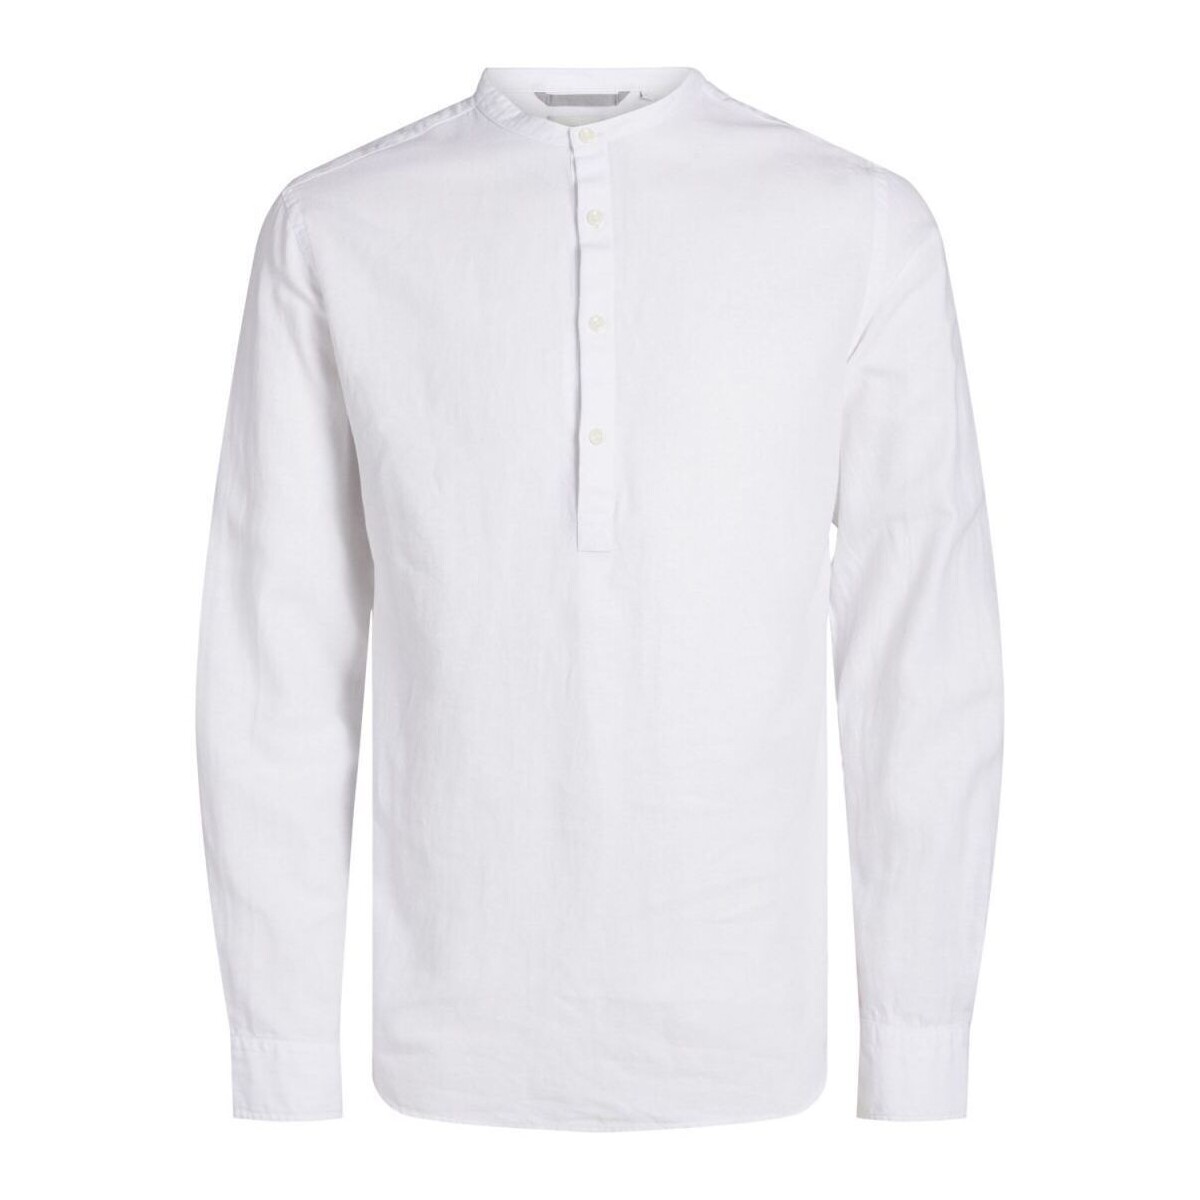 textil Hombre Camisas manga larga Jack & Jones 12251025 MAZE-BRIGHT WHITE Blanco